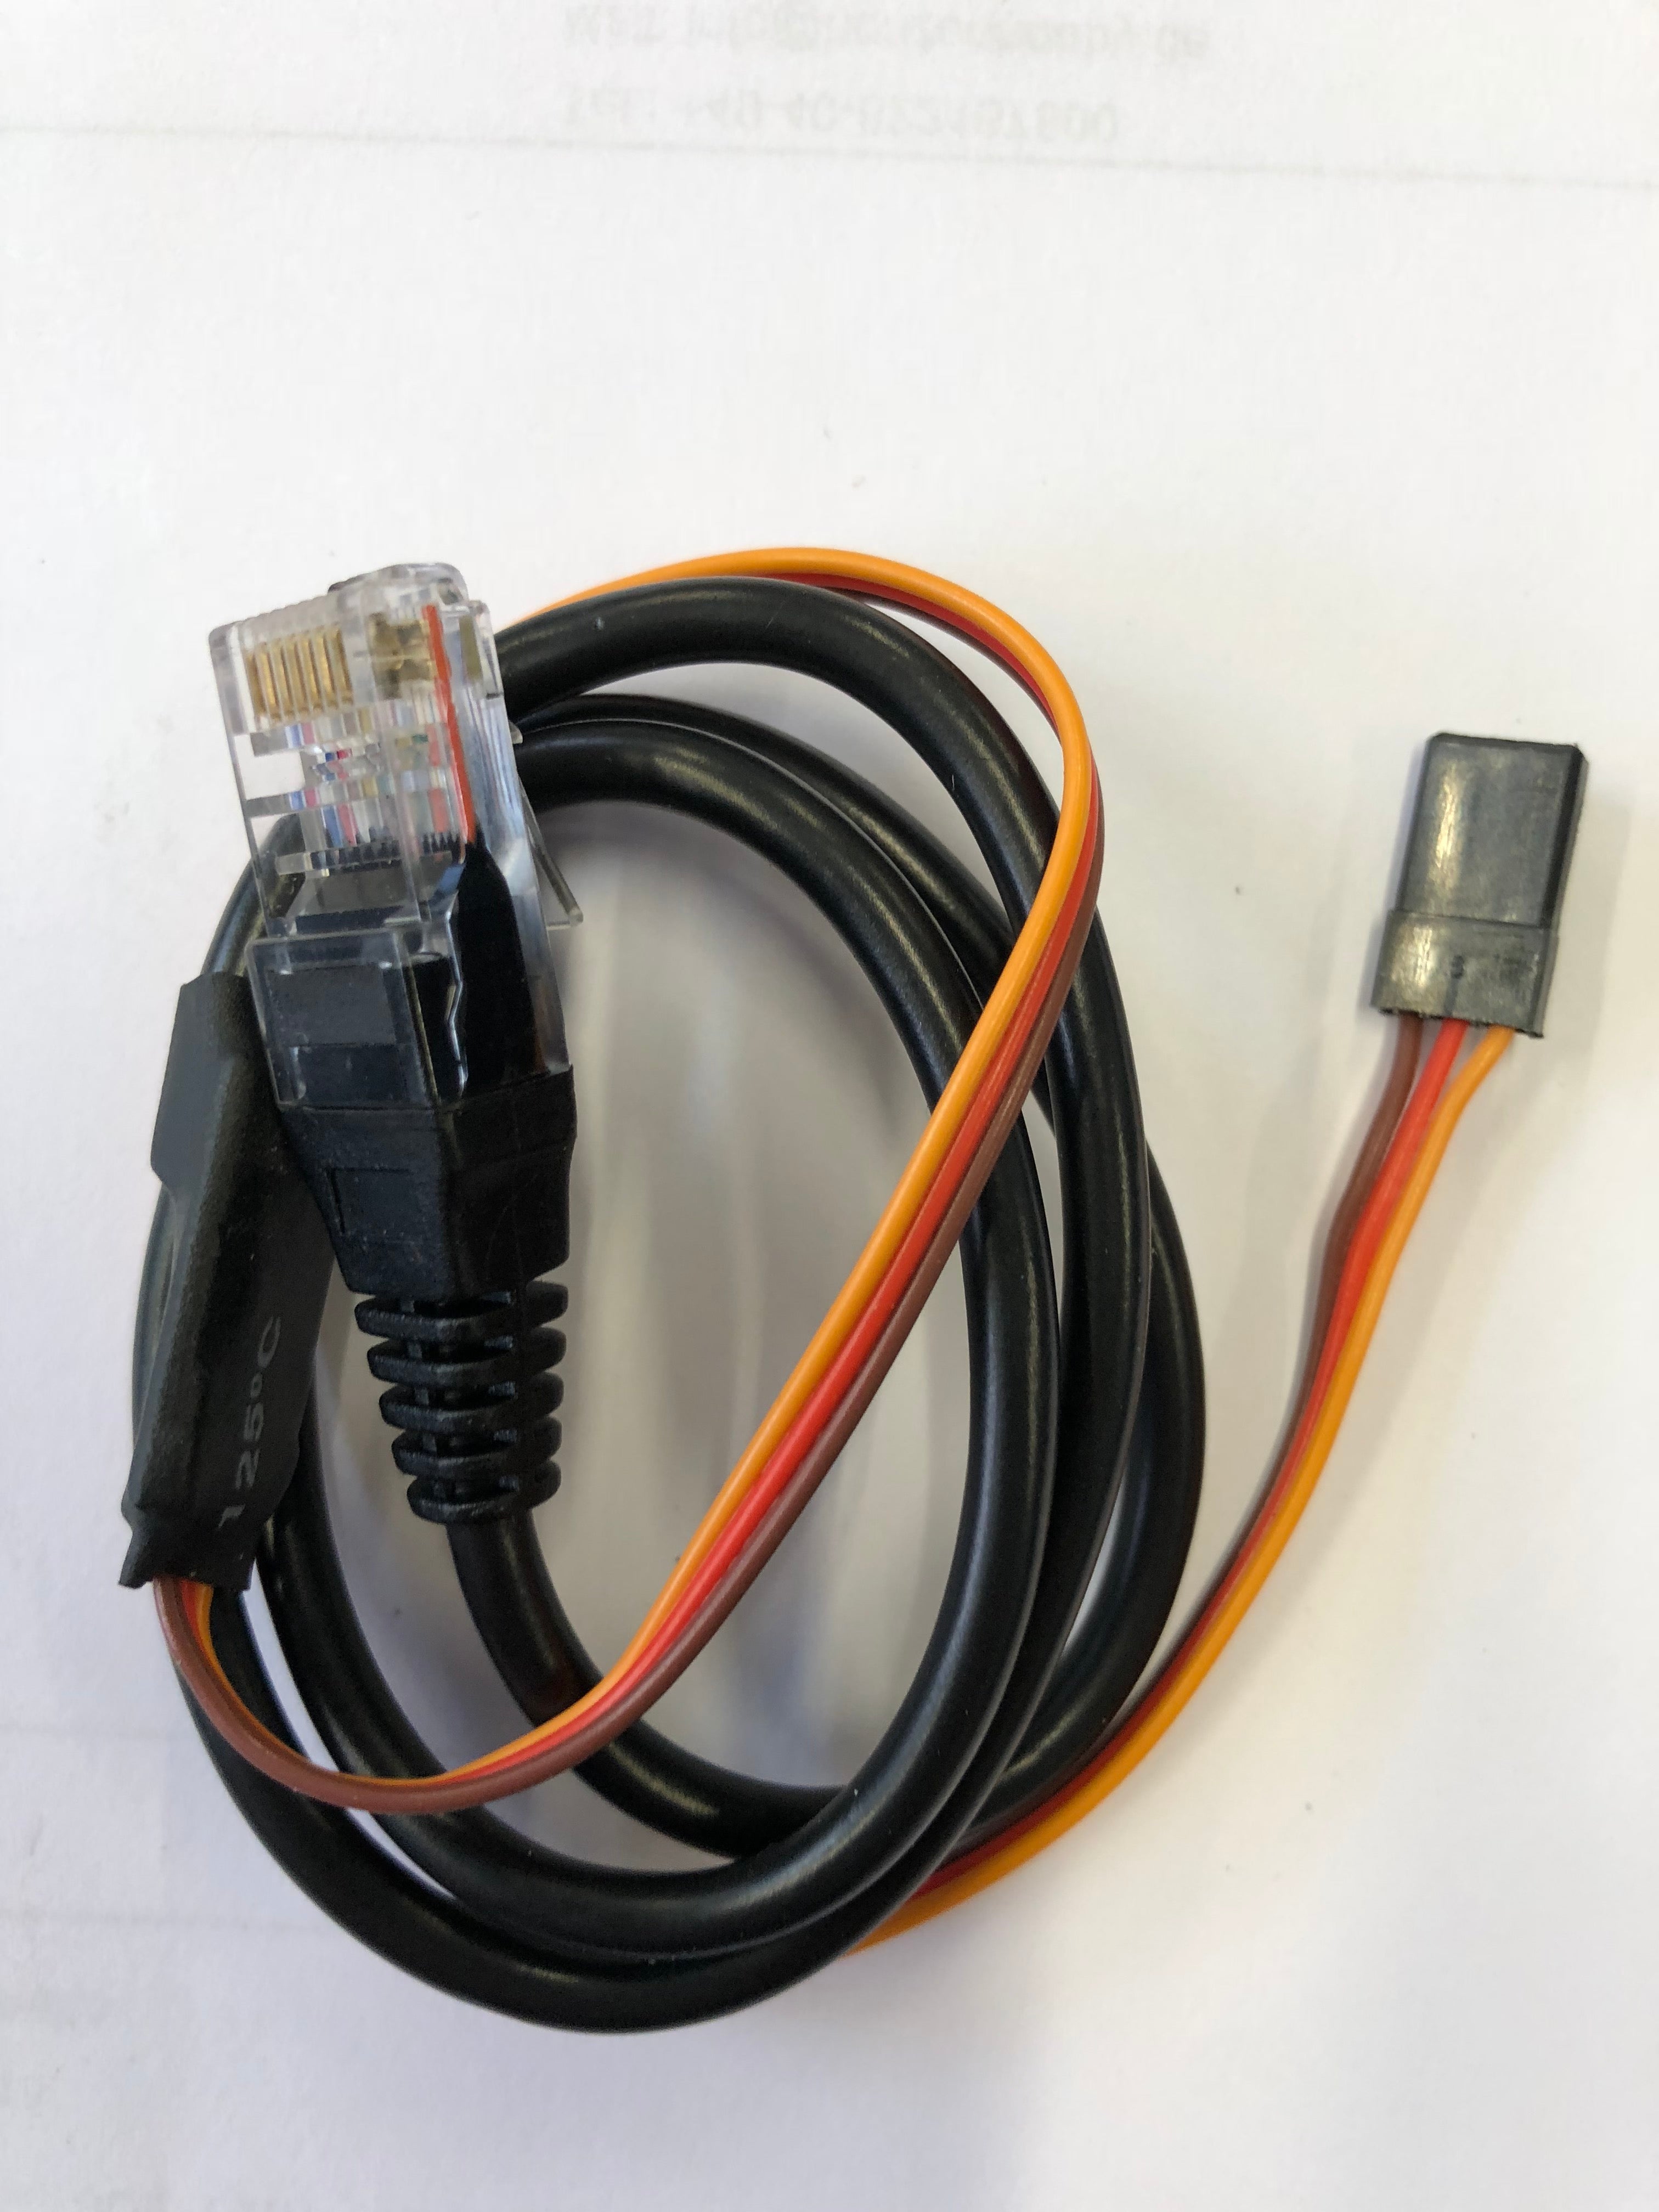 Xicoy Cable V6 ecu for Flight Computer 